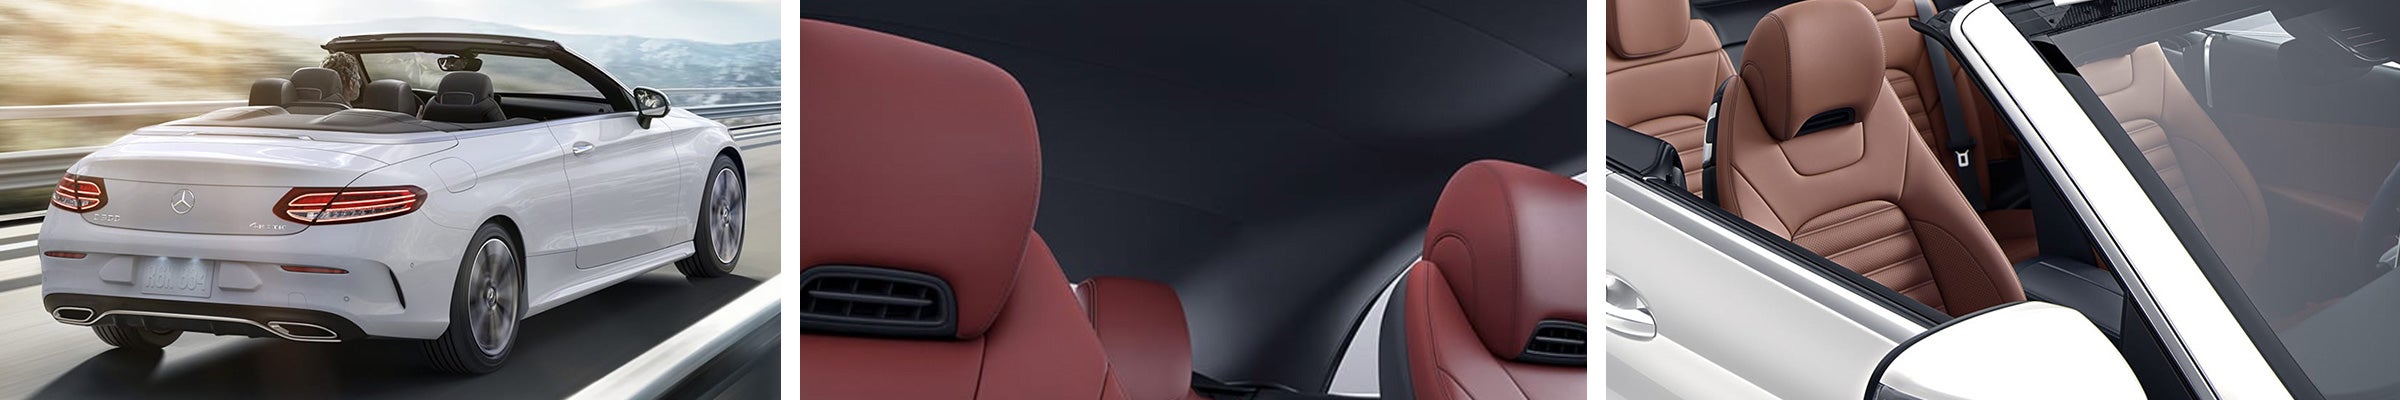 2020 Mercedes-Benz C-Class Cabriolet For Sale Madison WI | Sun Prairie